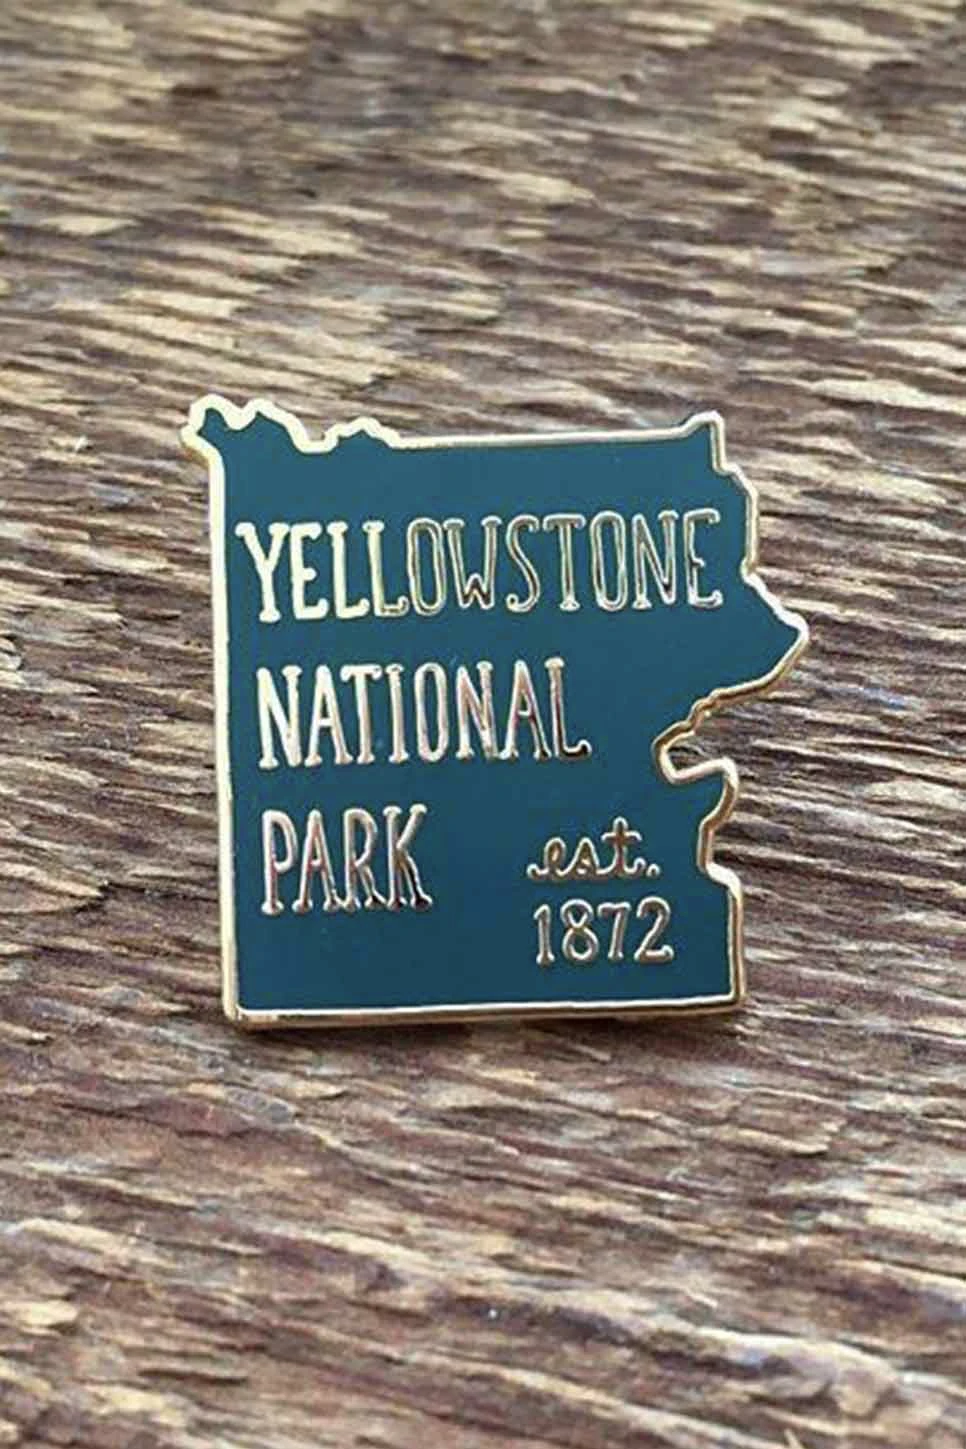 YELLOWSTONE NATIONAL PARK ENAMEL PIN